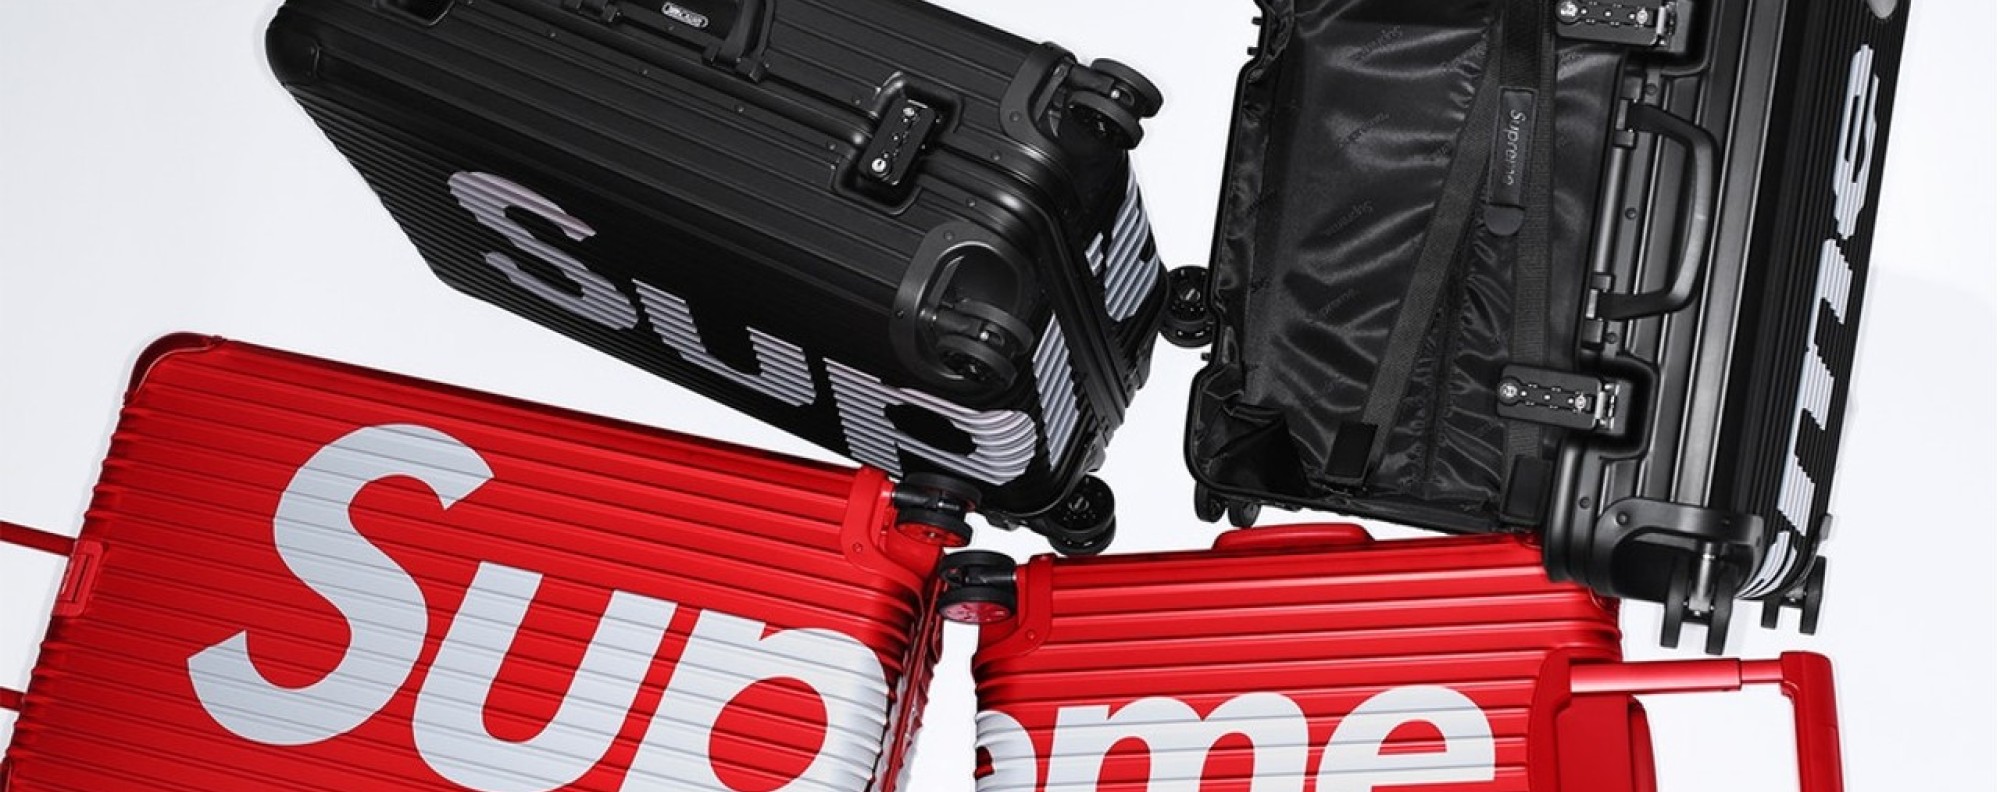 den første Kviksølv Parasit Supreme teases collaboration with luggage-brand giant Rimowa | South China  Morning Post